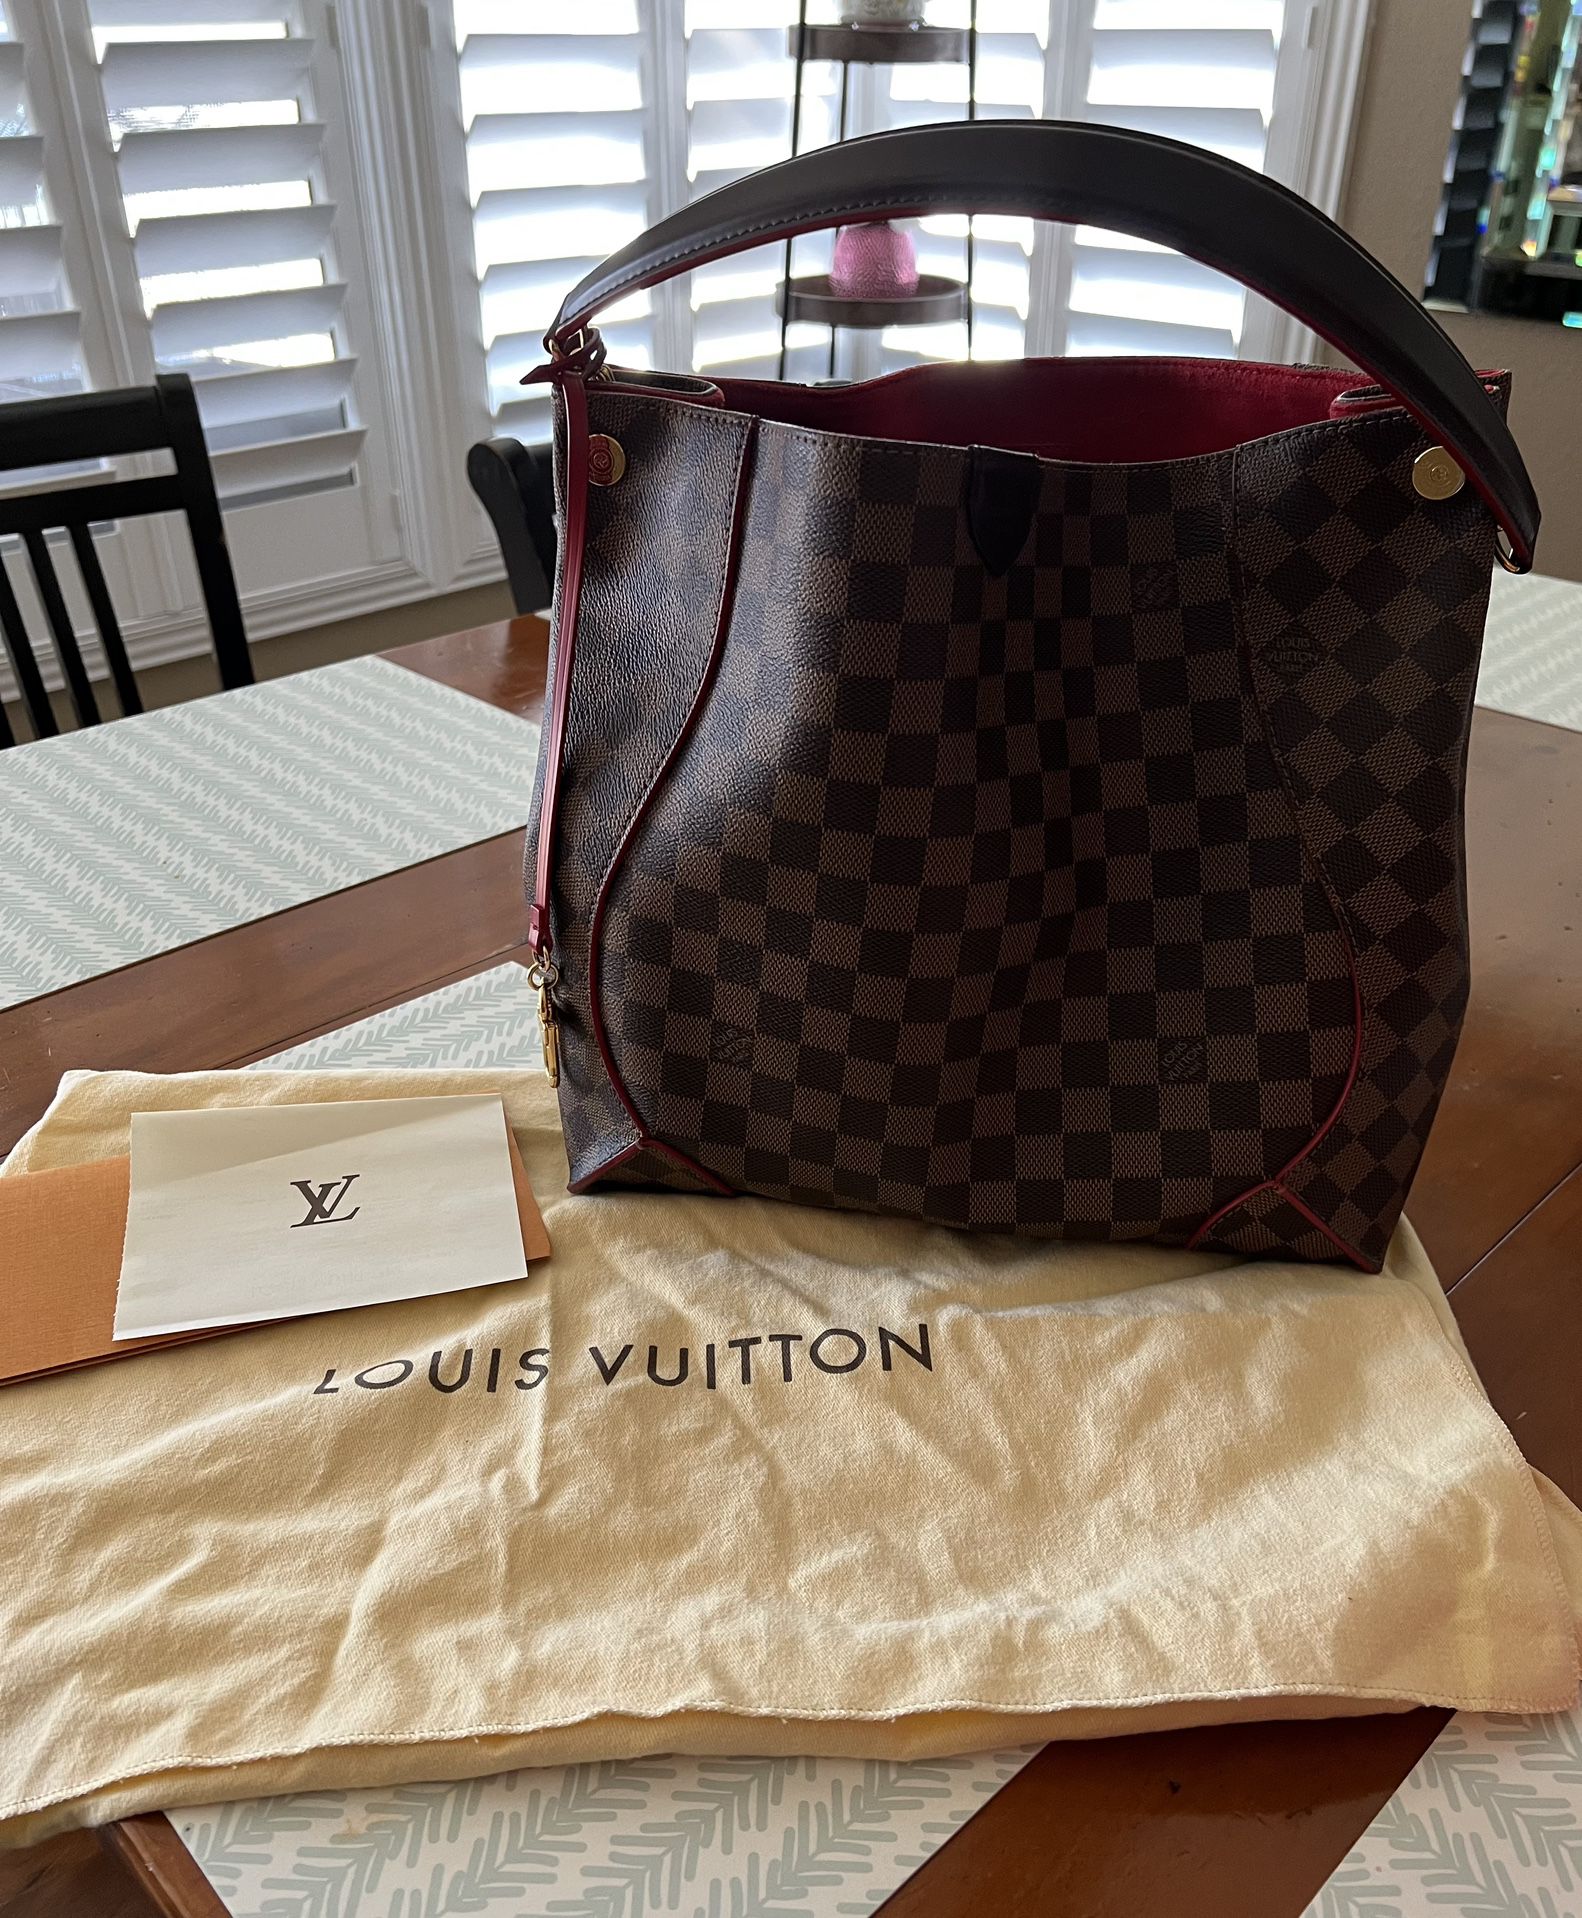 Louis Vuitton original handbag for Sale in Temecula, CA - OfferUp